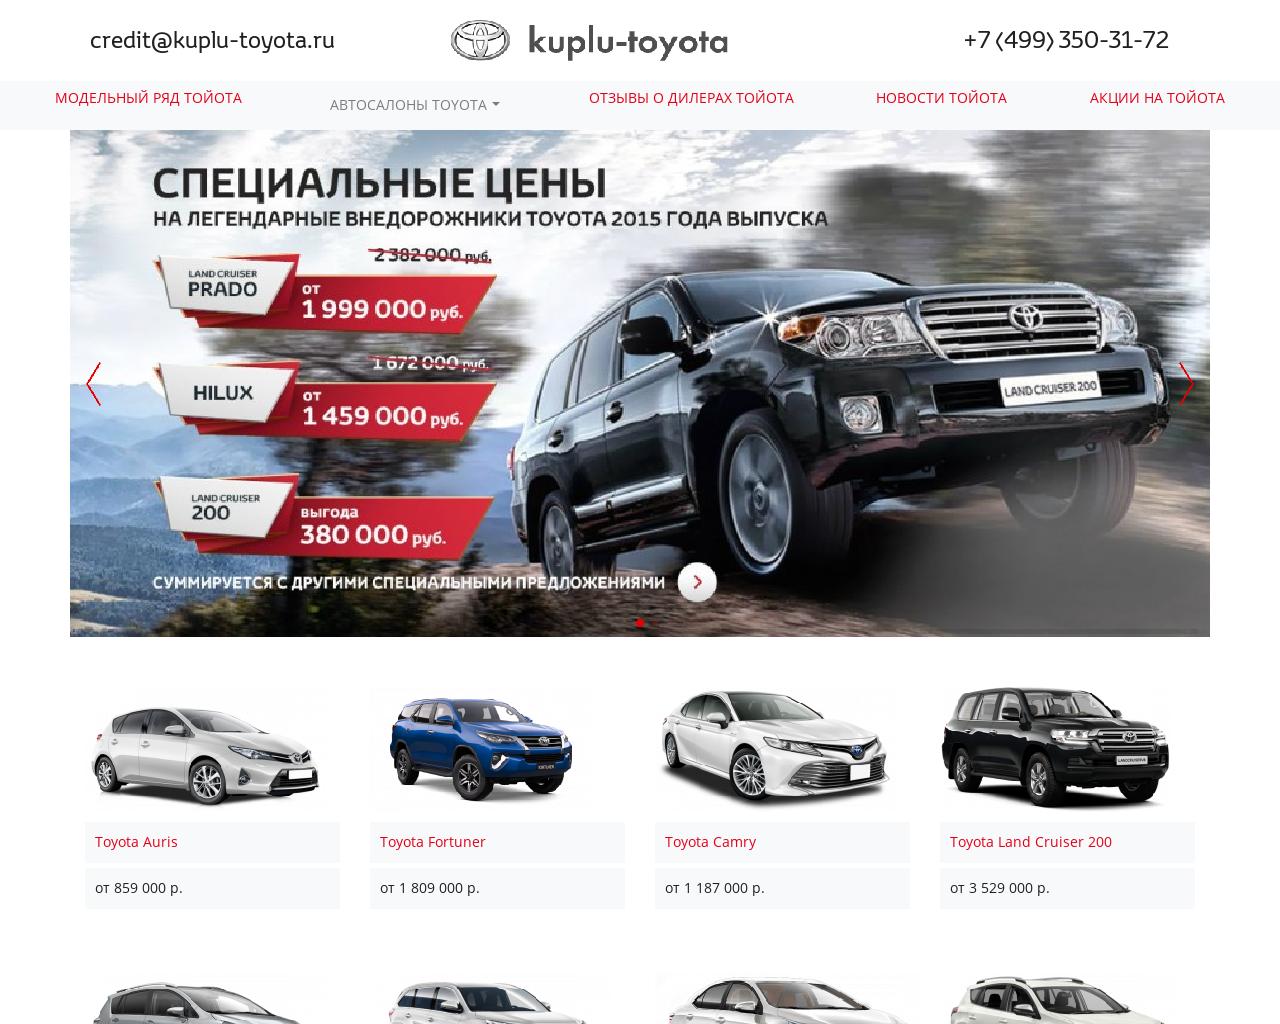 Изображение сайта kuplu-toyota.ru в разрешении 1280x1024